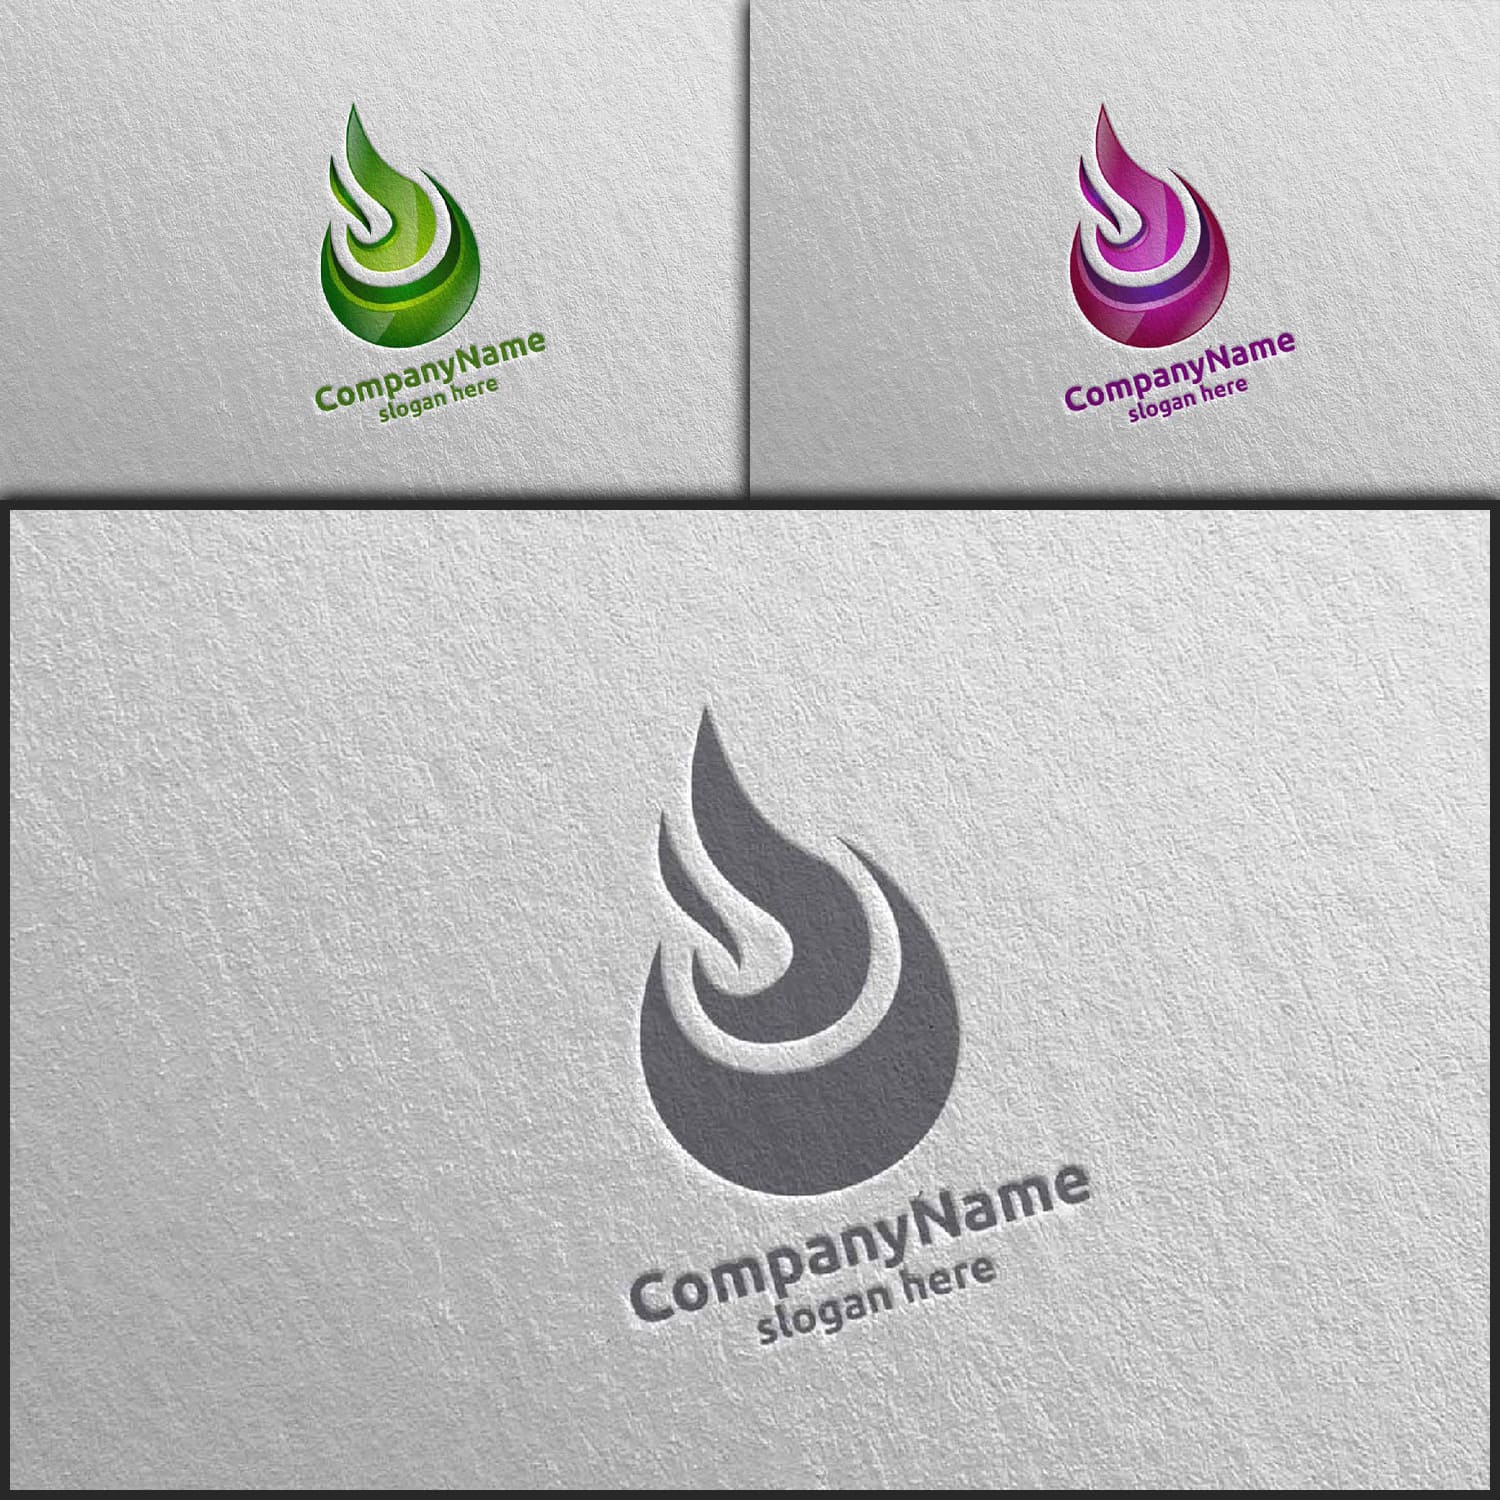 3D Fire Flame Element Logo Design Created By denayunedb.